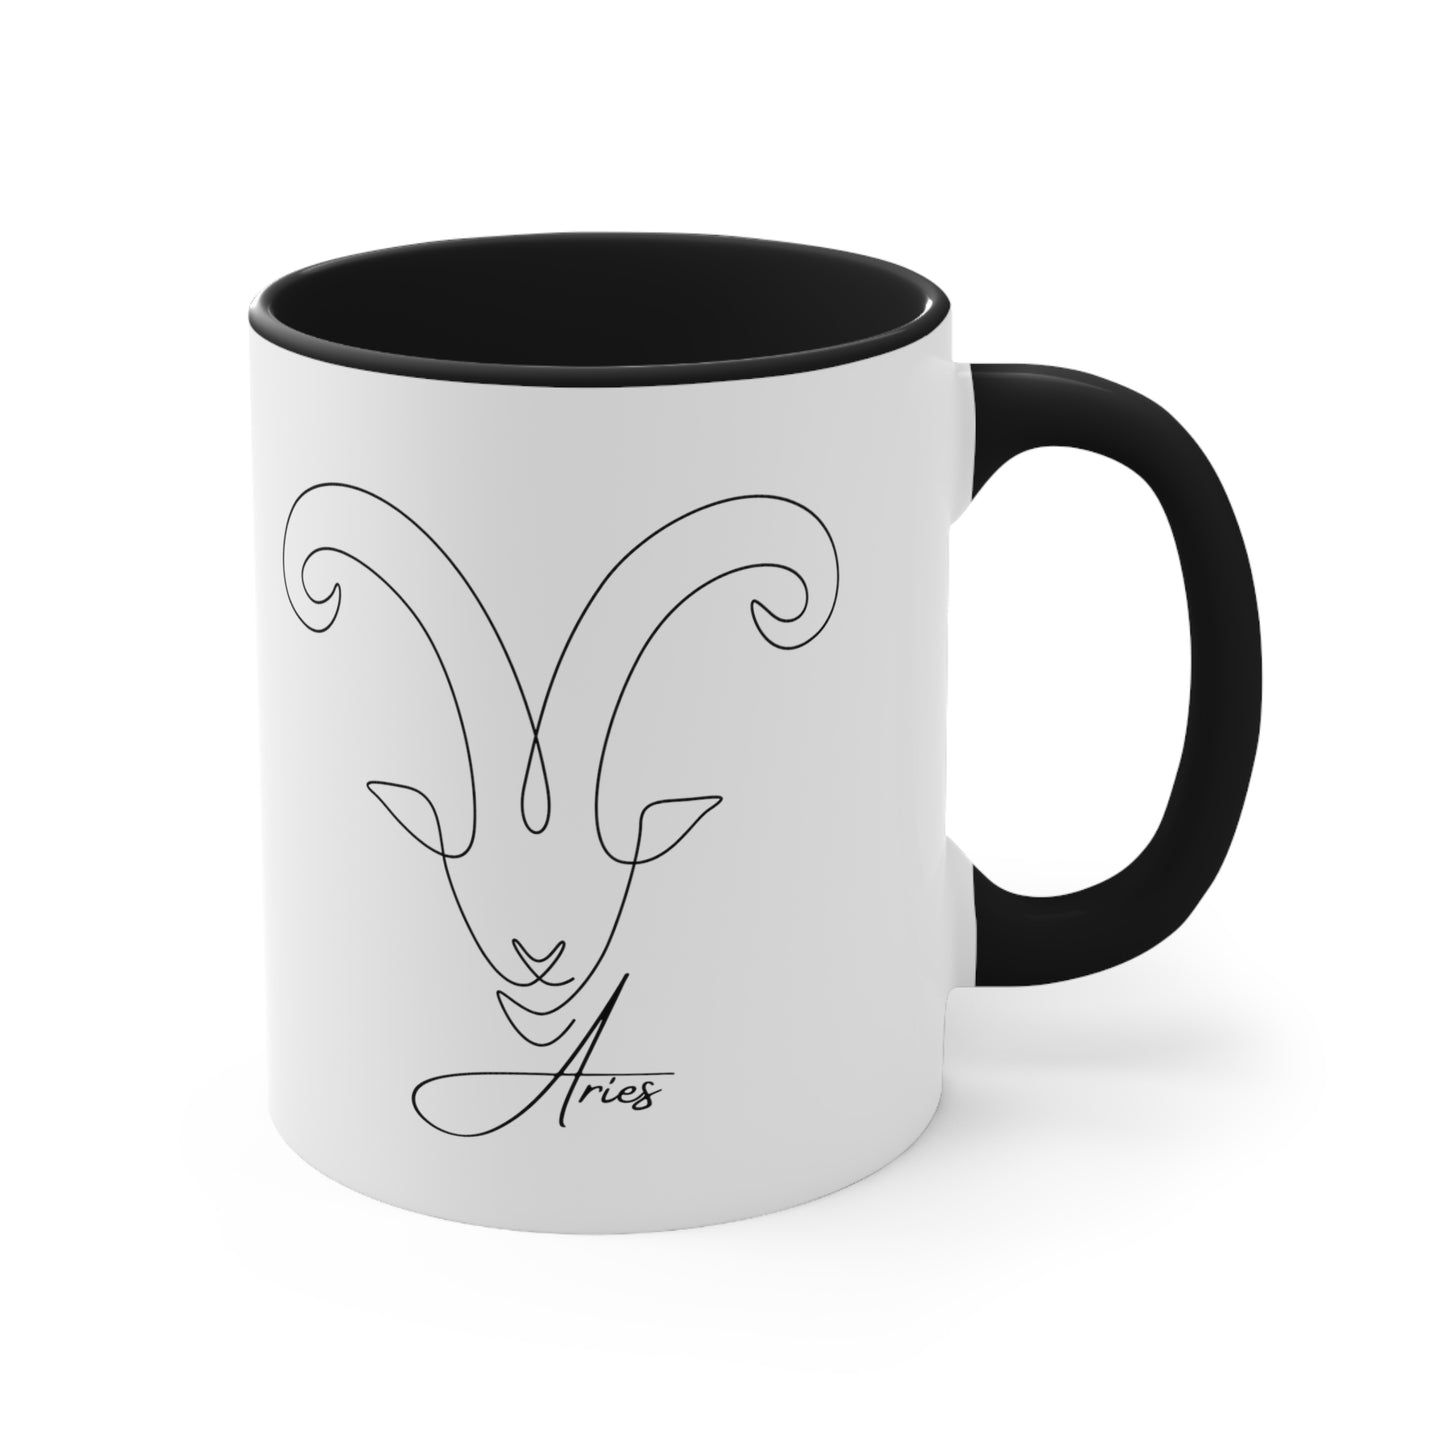 Abstract Aries coffee mug